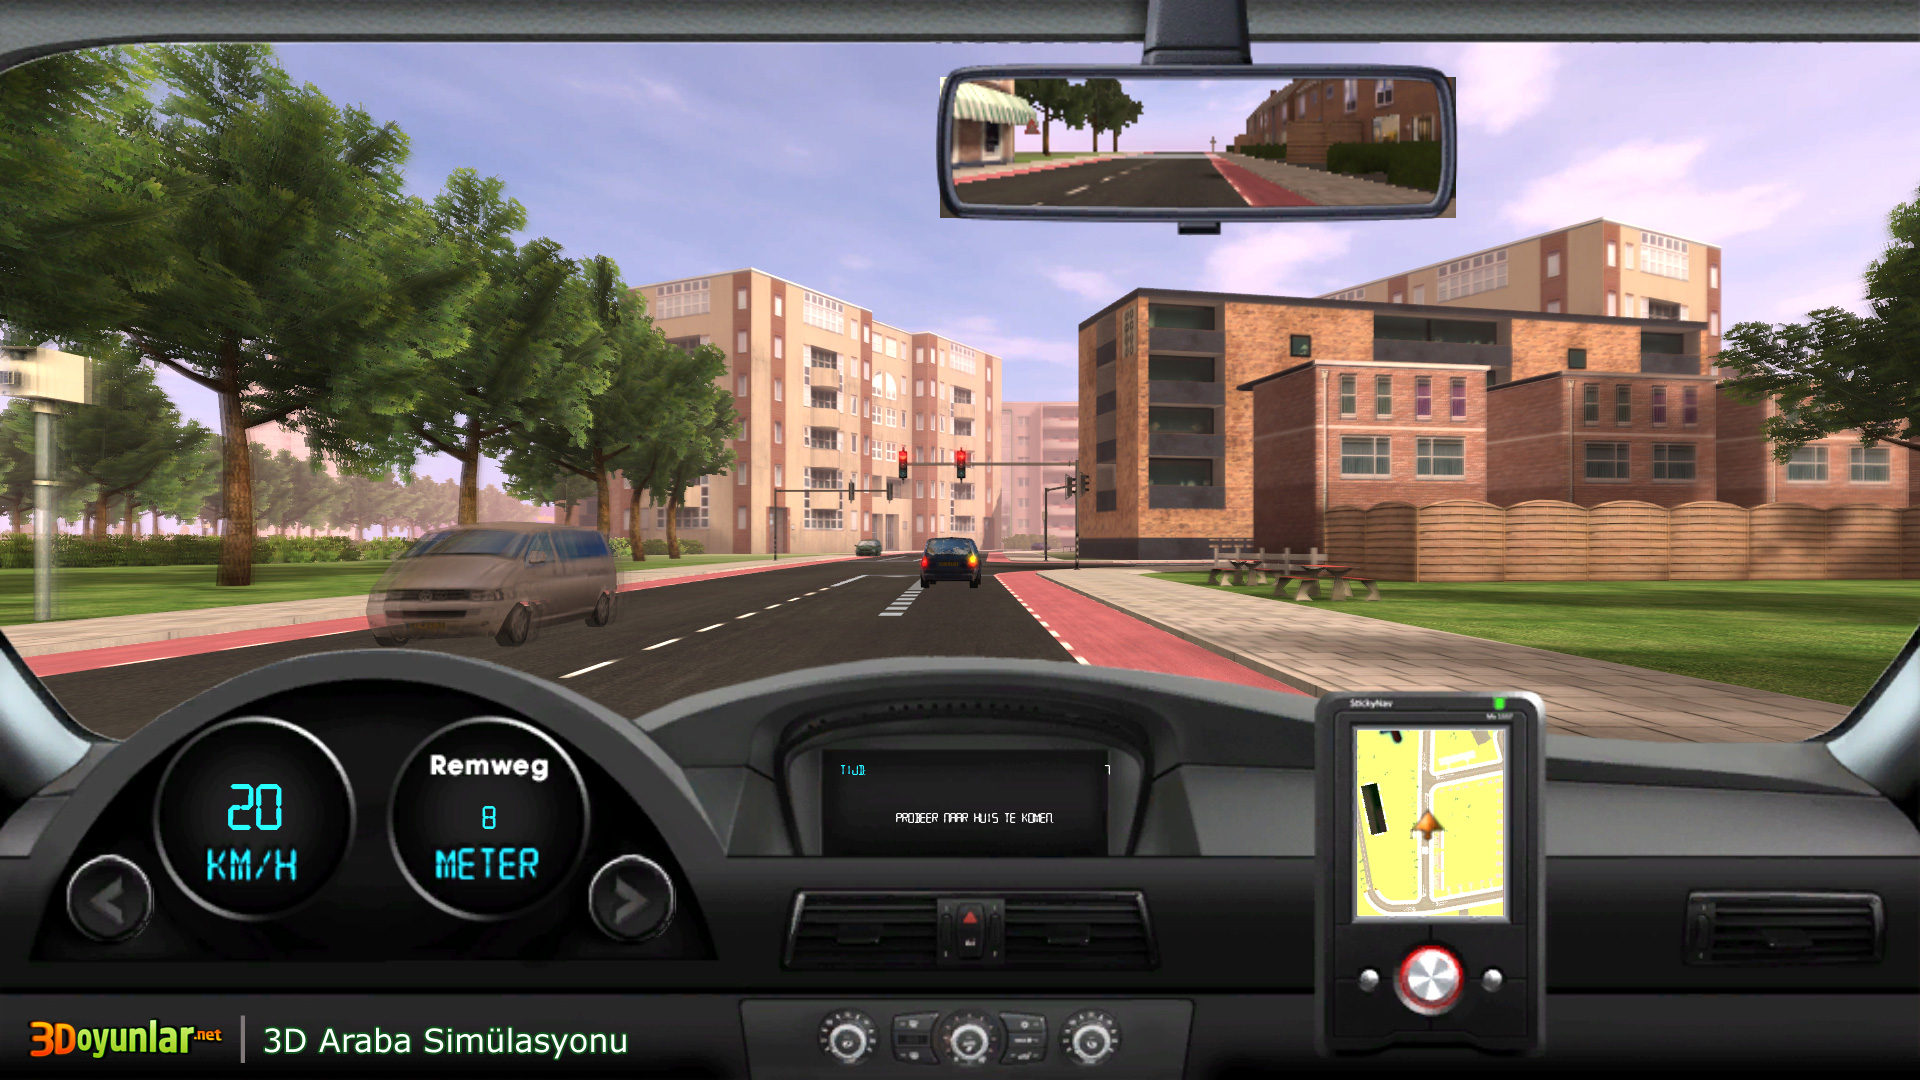 3d Araba Simulasyonu Oyunu 3d Araba Oyunlari Oyna